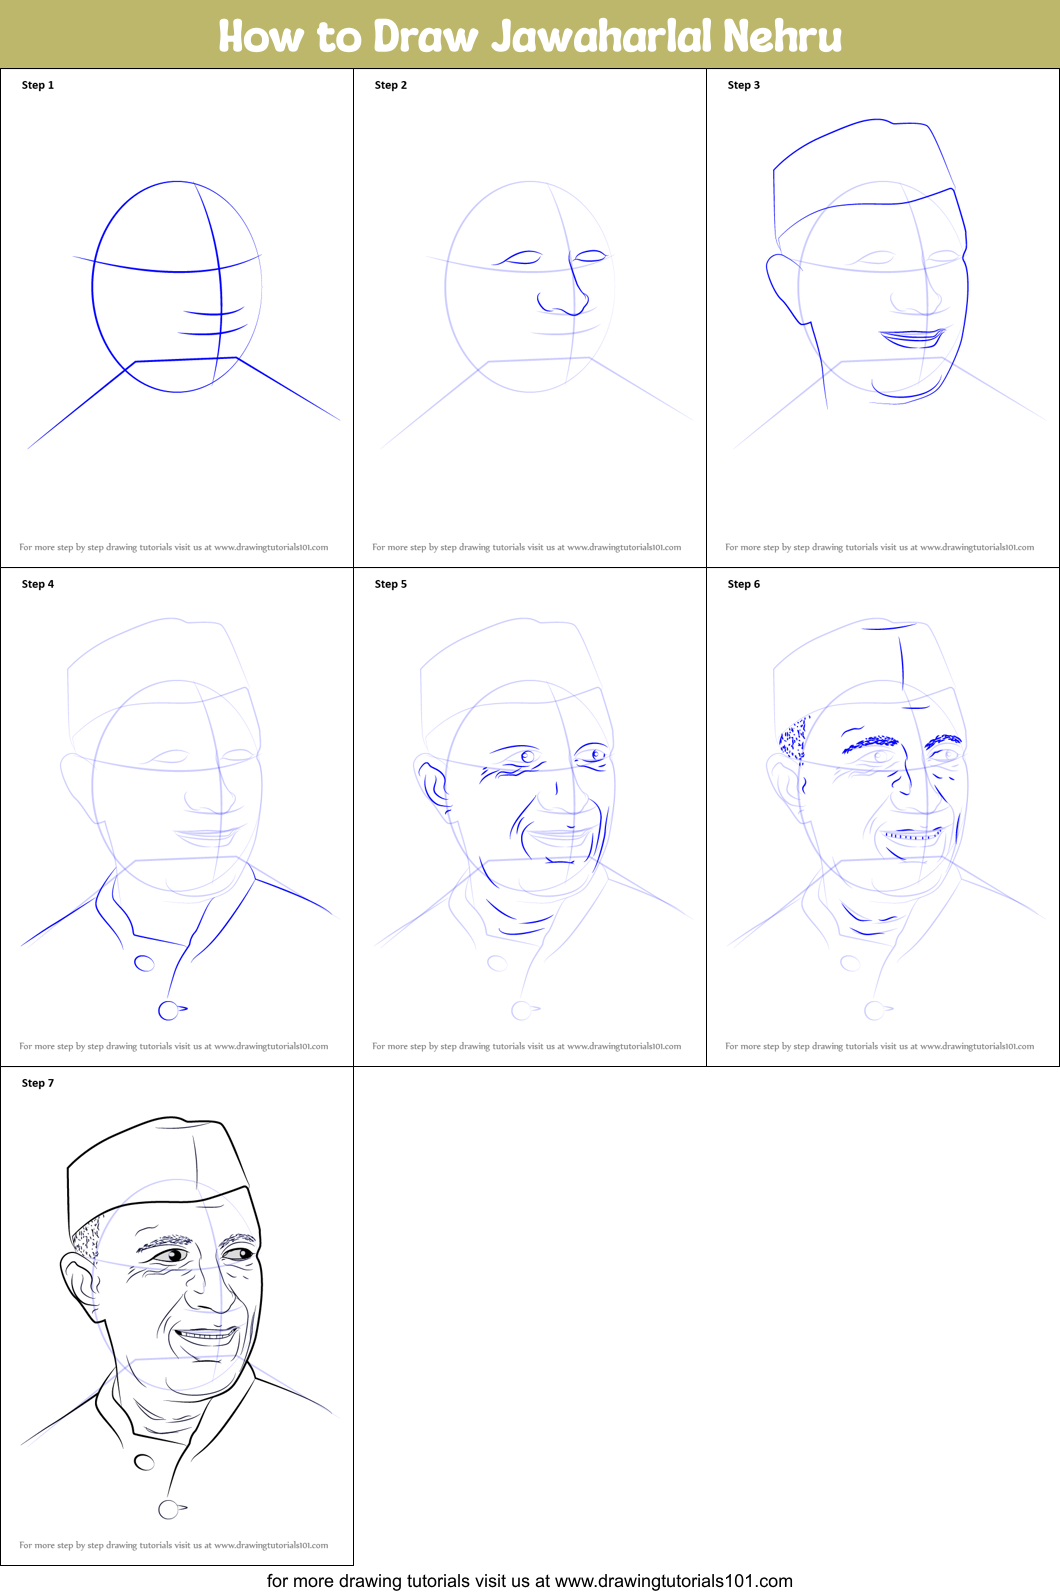 How to draw Jawaharlal Nehru | step by step tutorial - YouTube